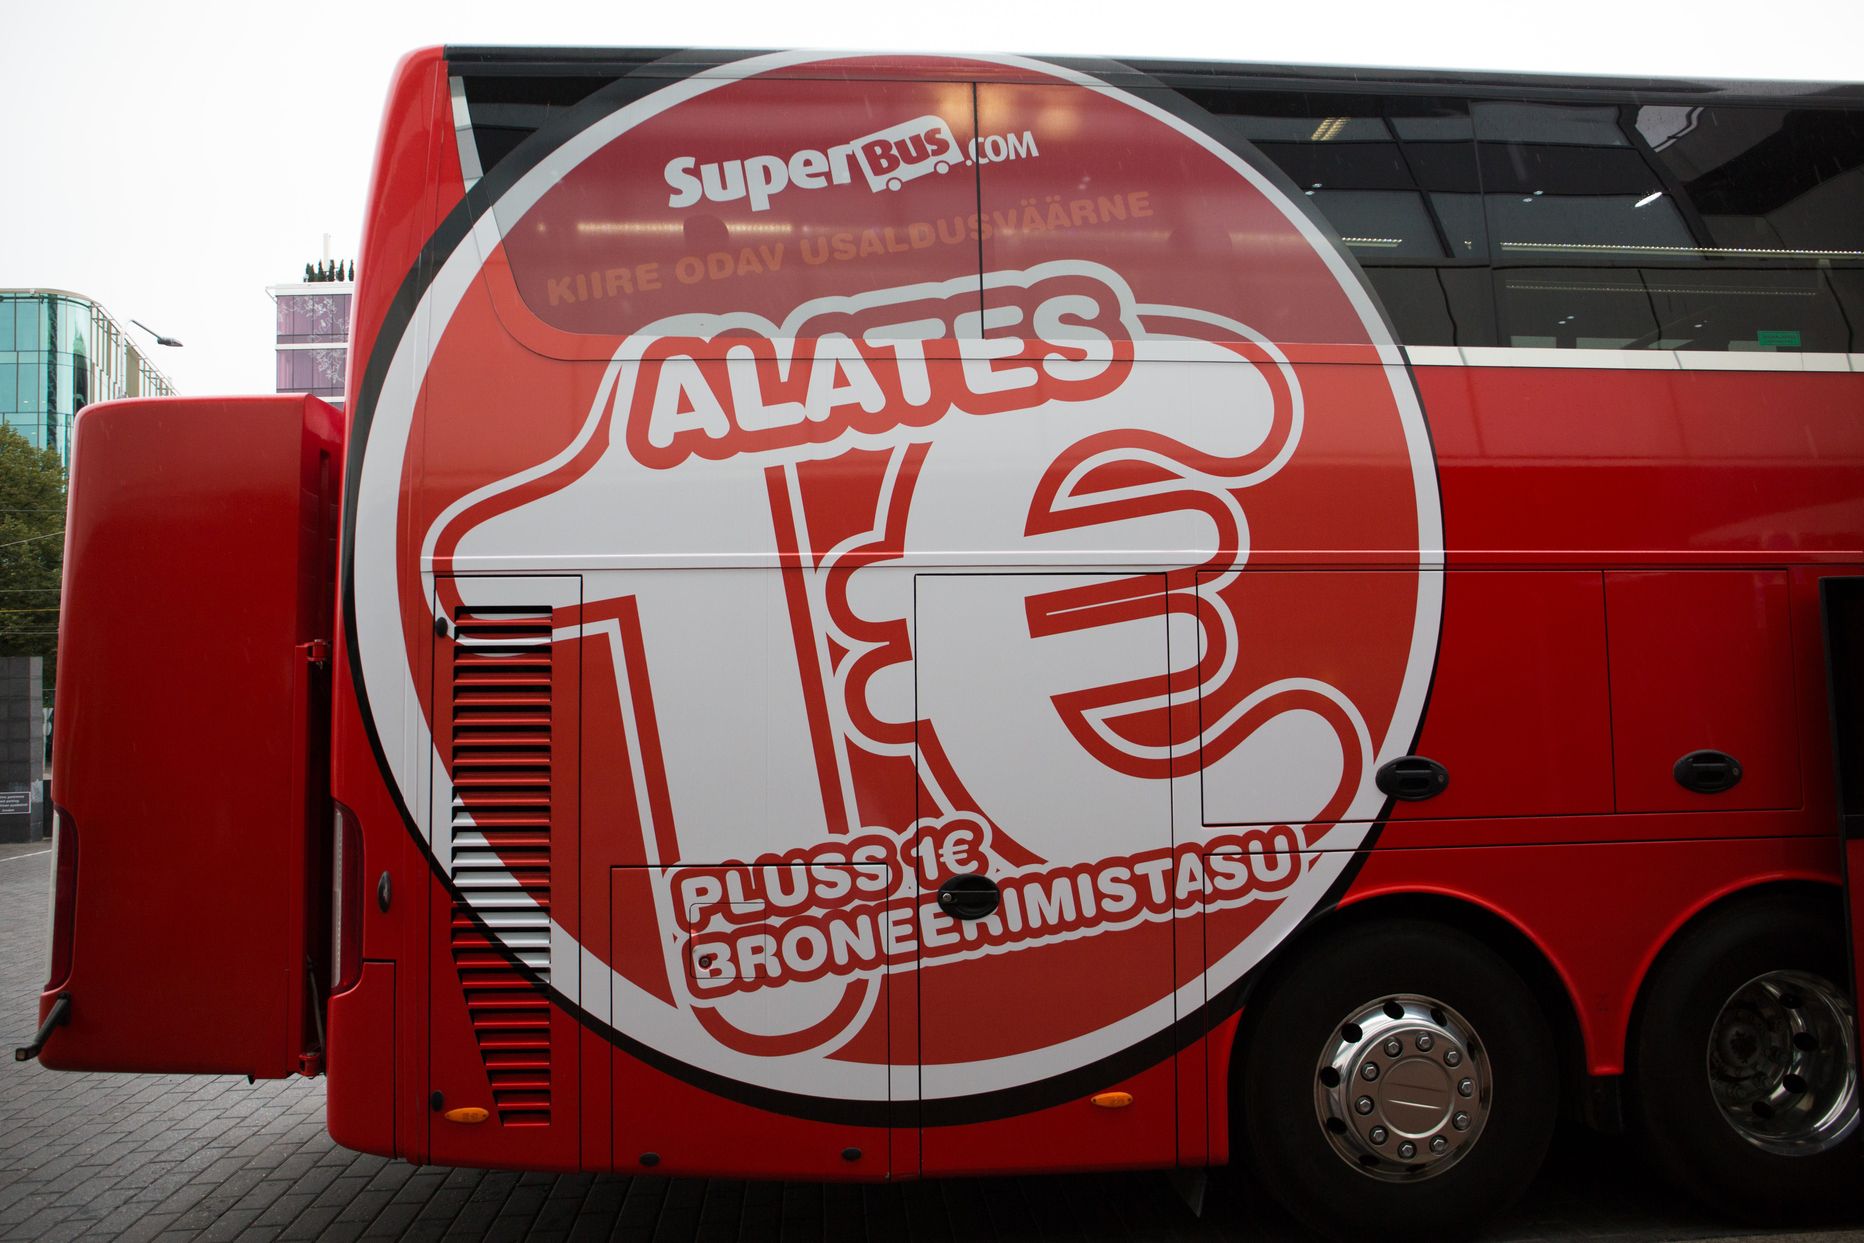 Реклама на автобусе Superbus.